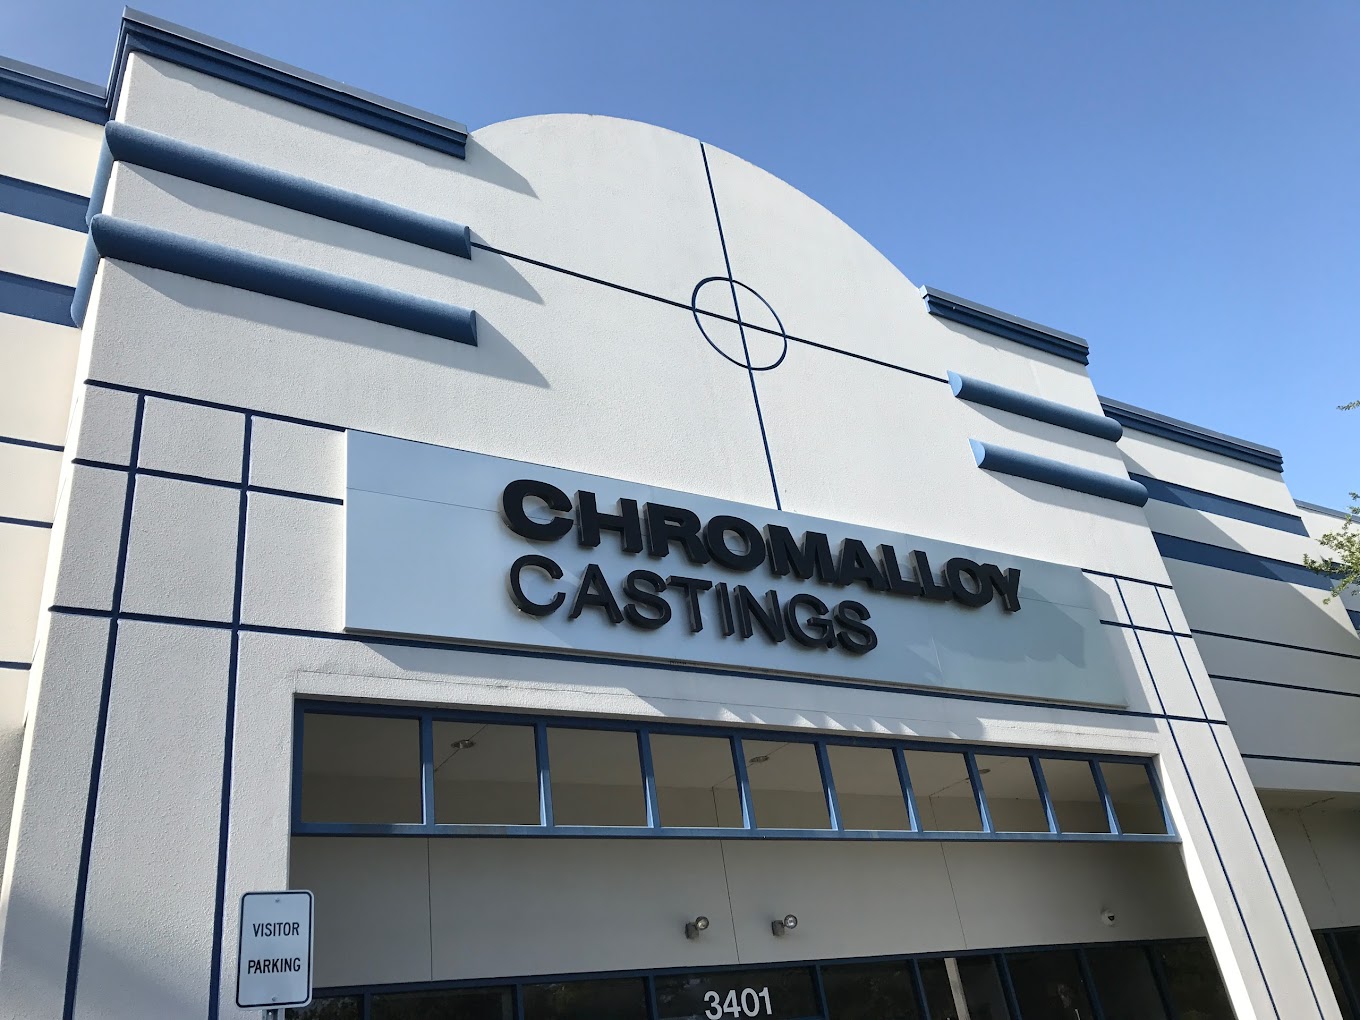 Chromalloy Castings Building